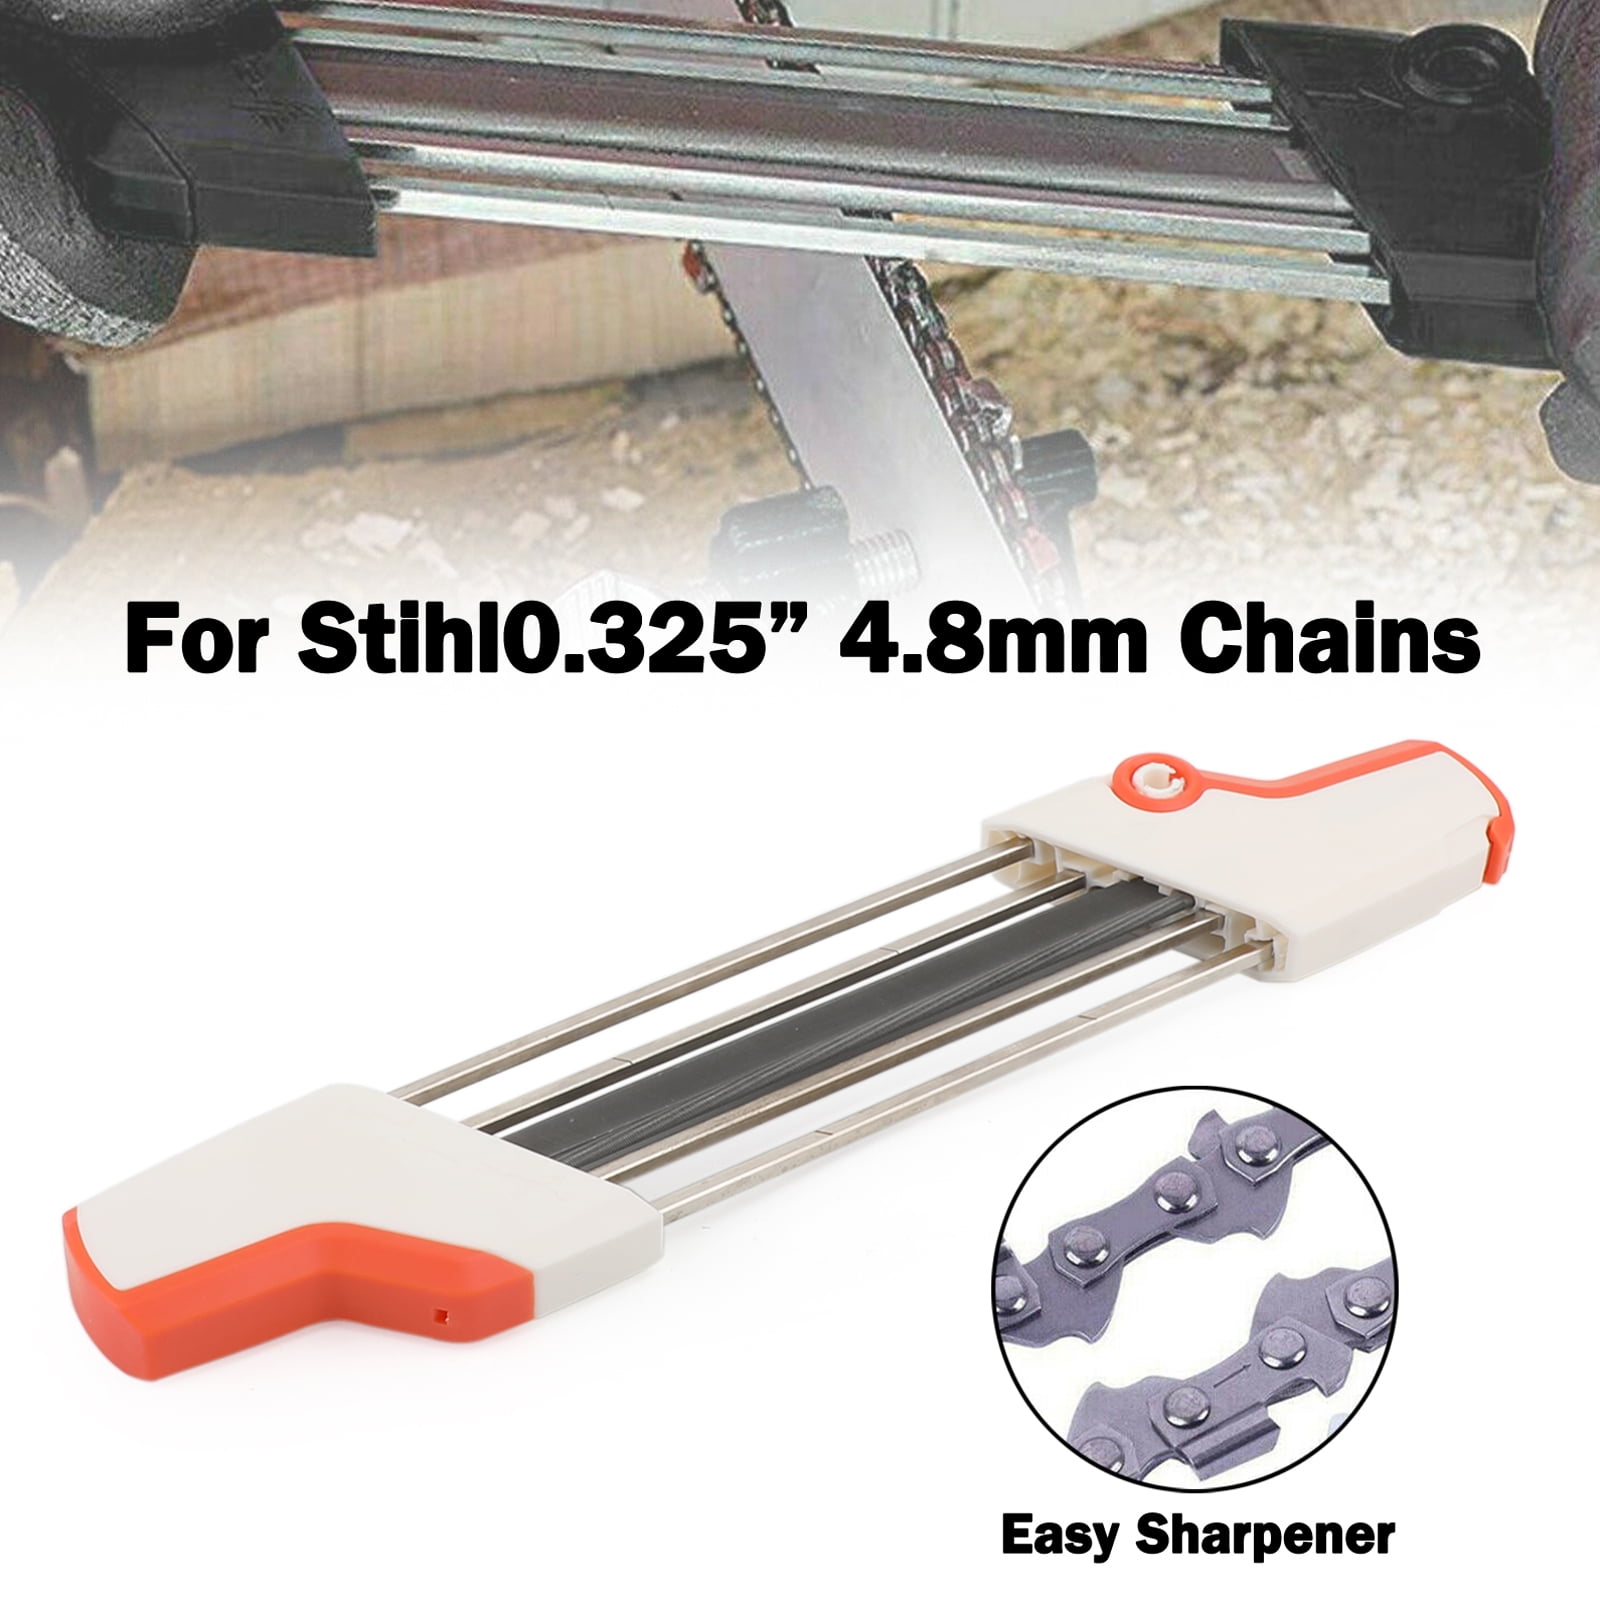 Chainsaw sharpening tool kit Power-Sharp Grinding Filing Stihl Tecomec Stump 